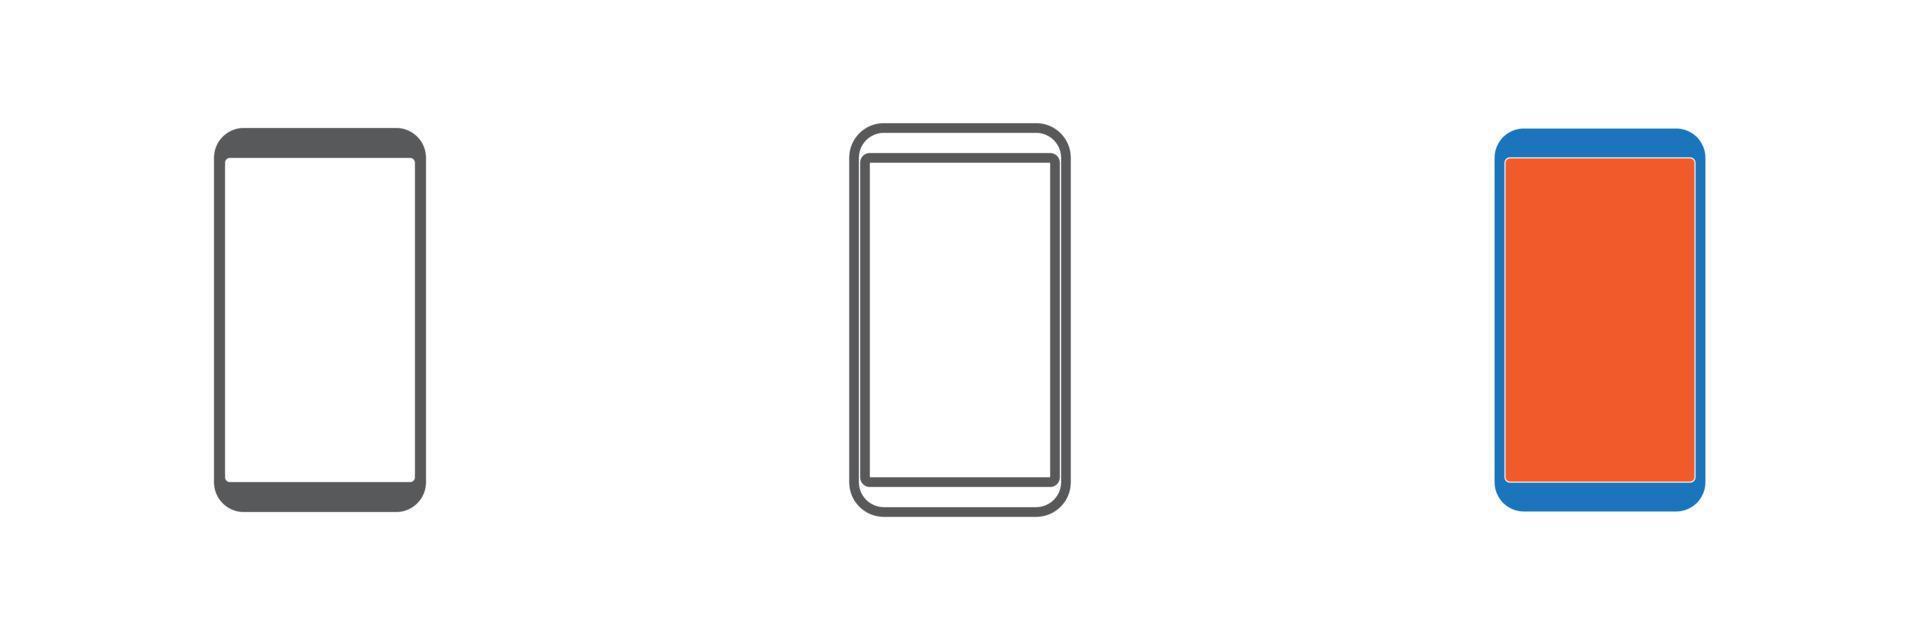 mobile phone icon vector. smartphone icon vector illustration